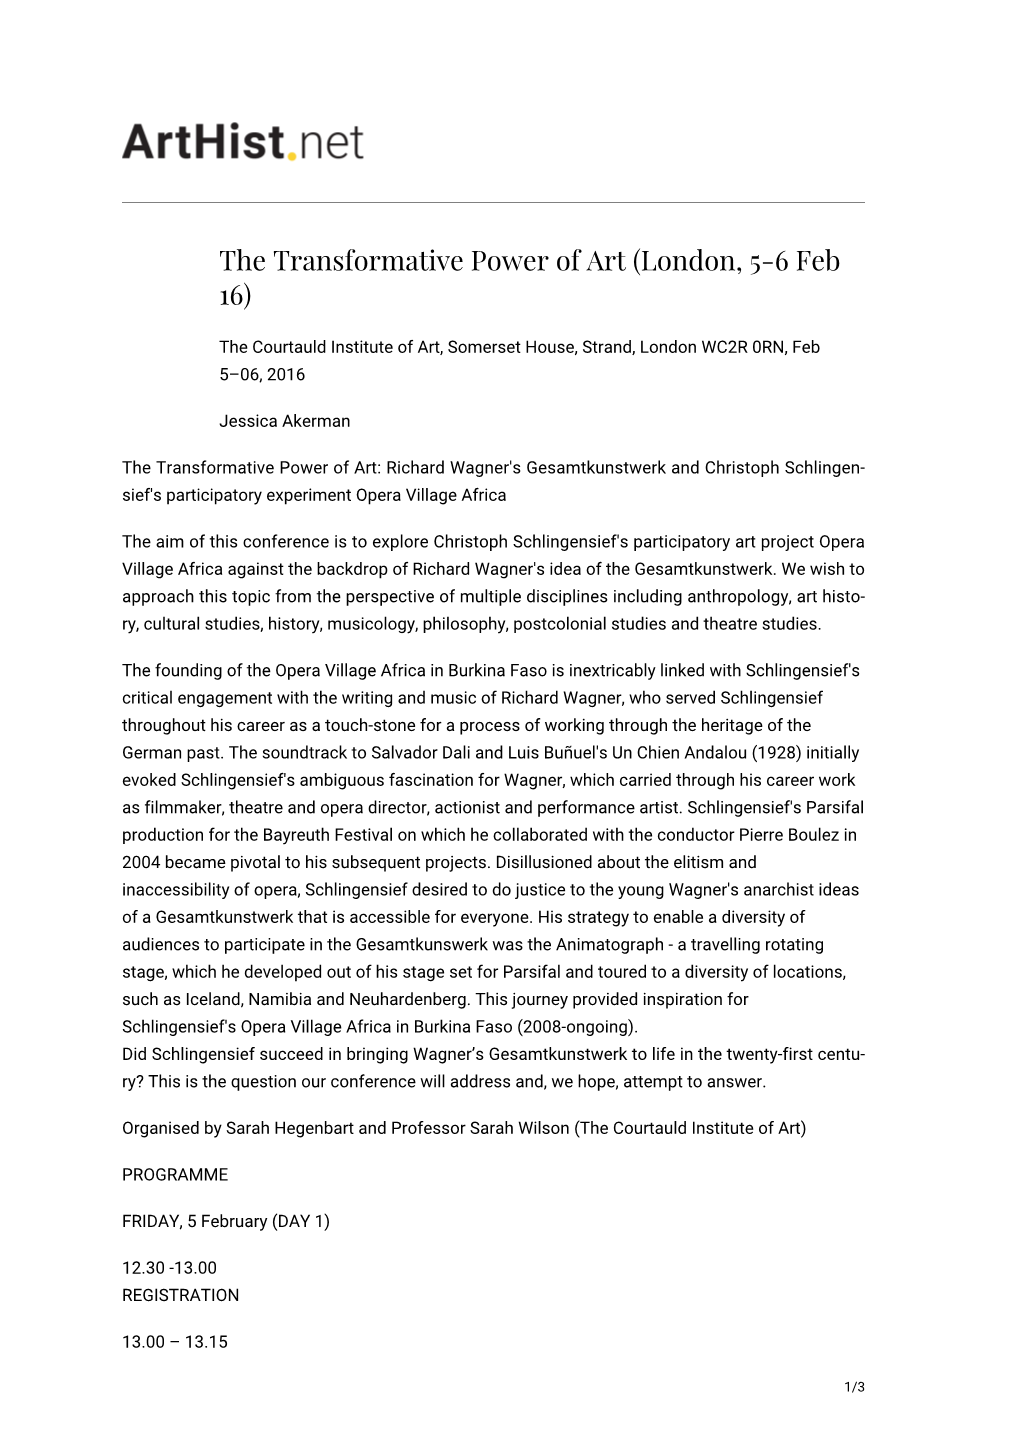 The Transformative Power of Art (London, 5-6 Feb 16)